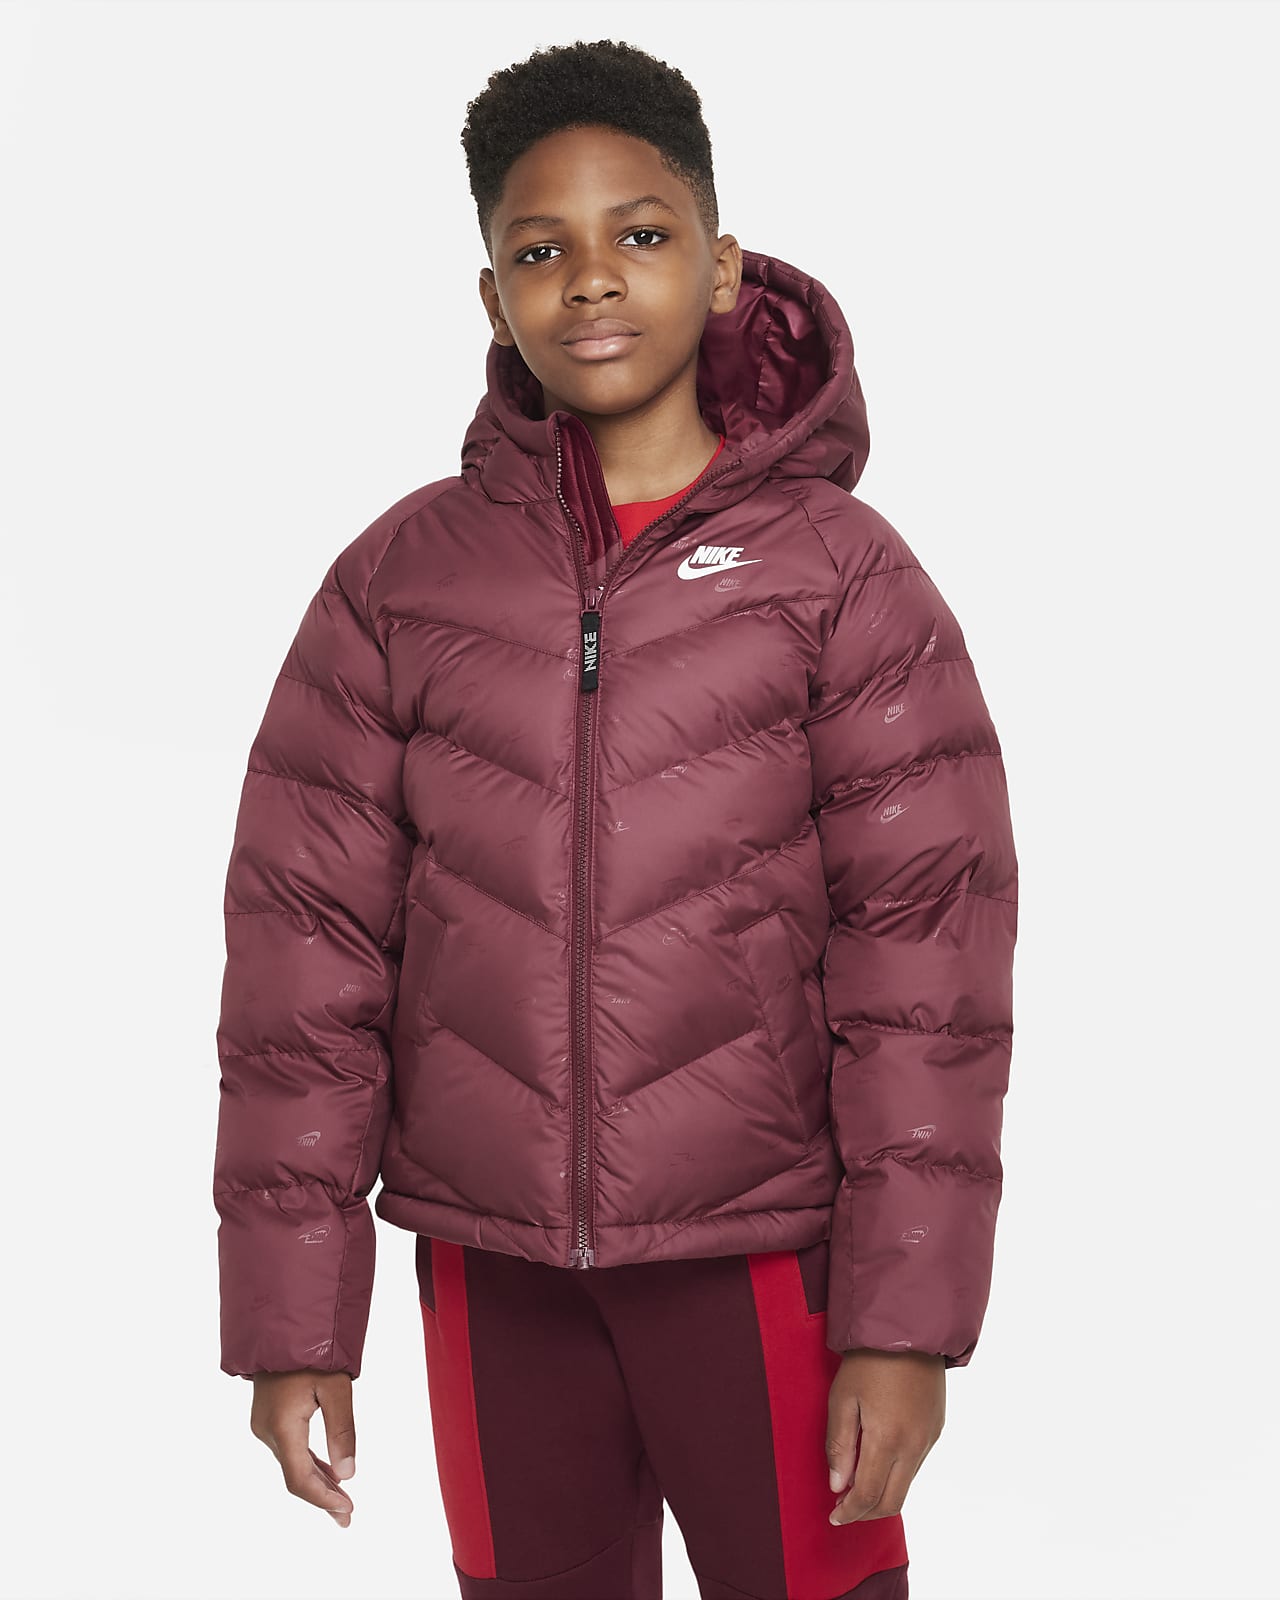 Nike Sportswear Jaqueta amb caputxa amb farciment sintètic - Nen/a